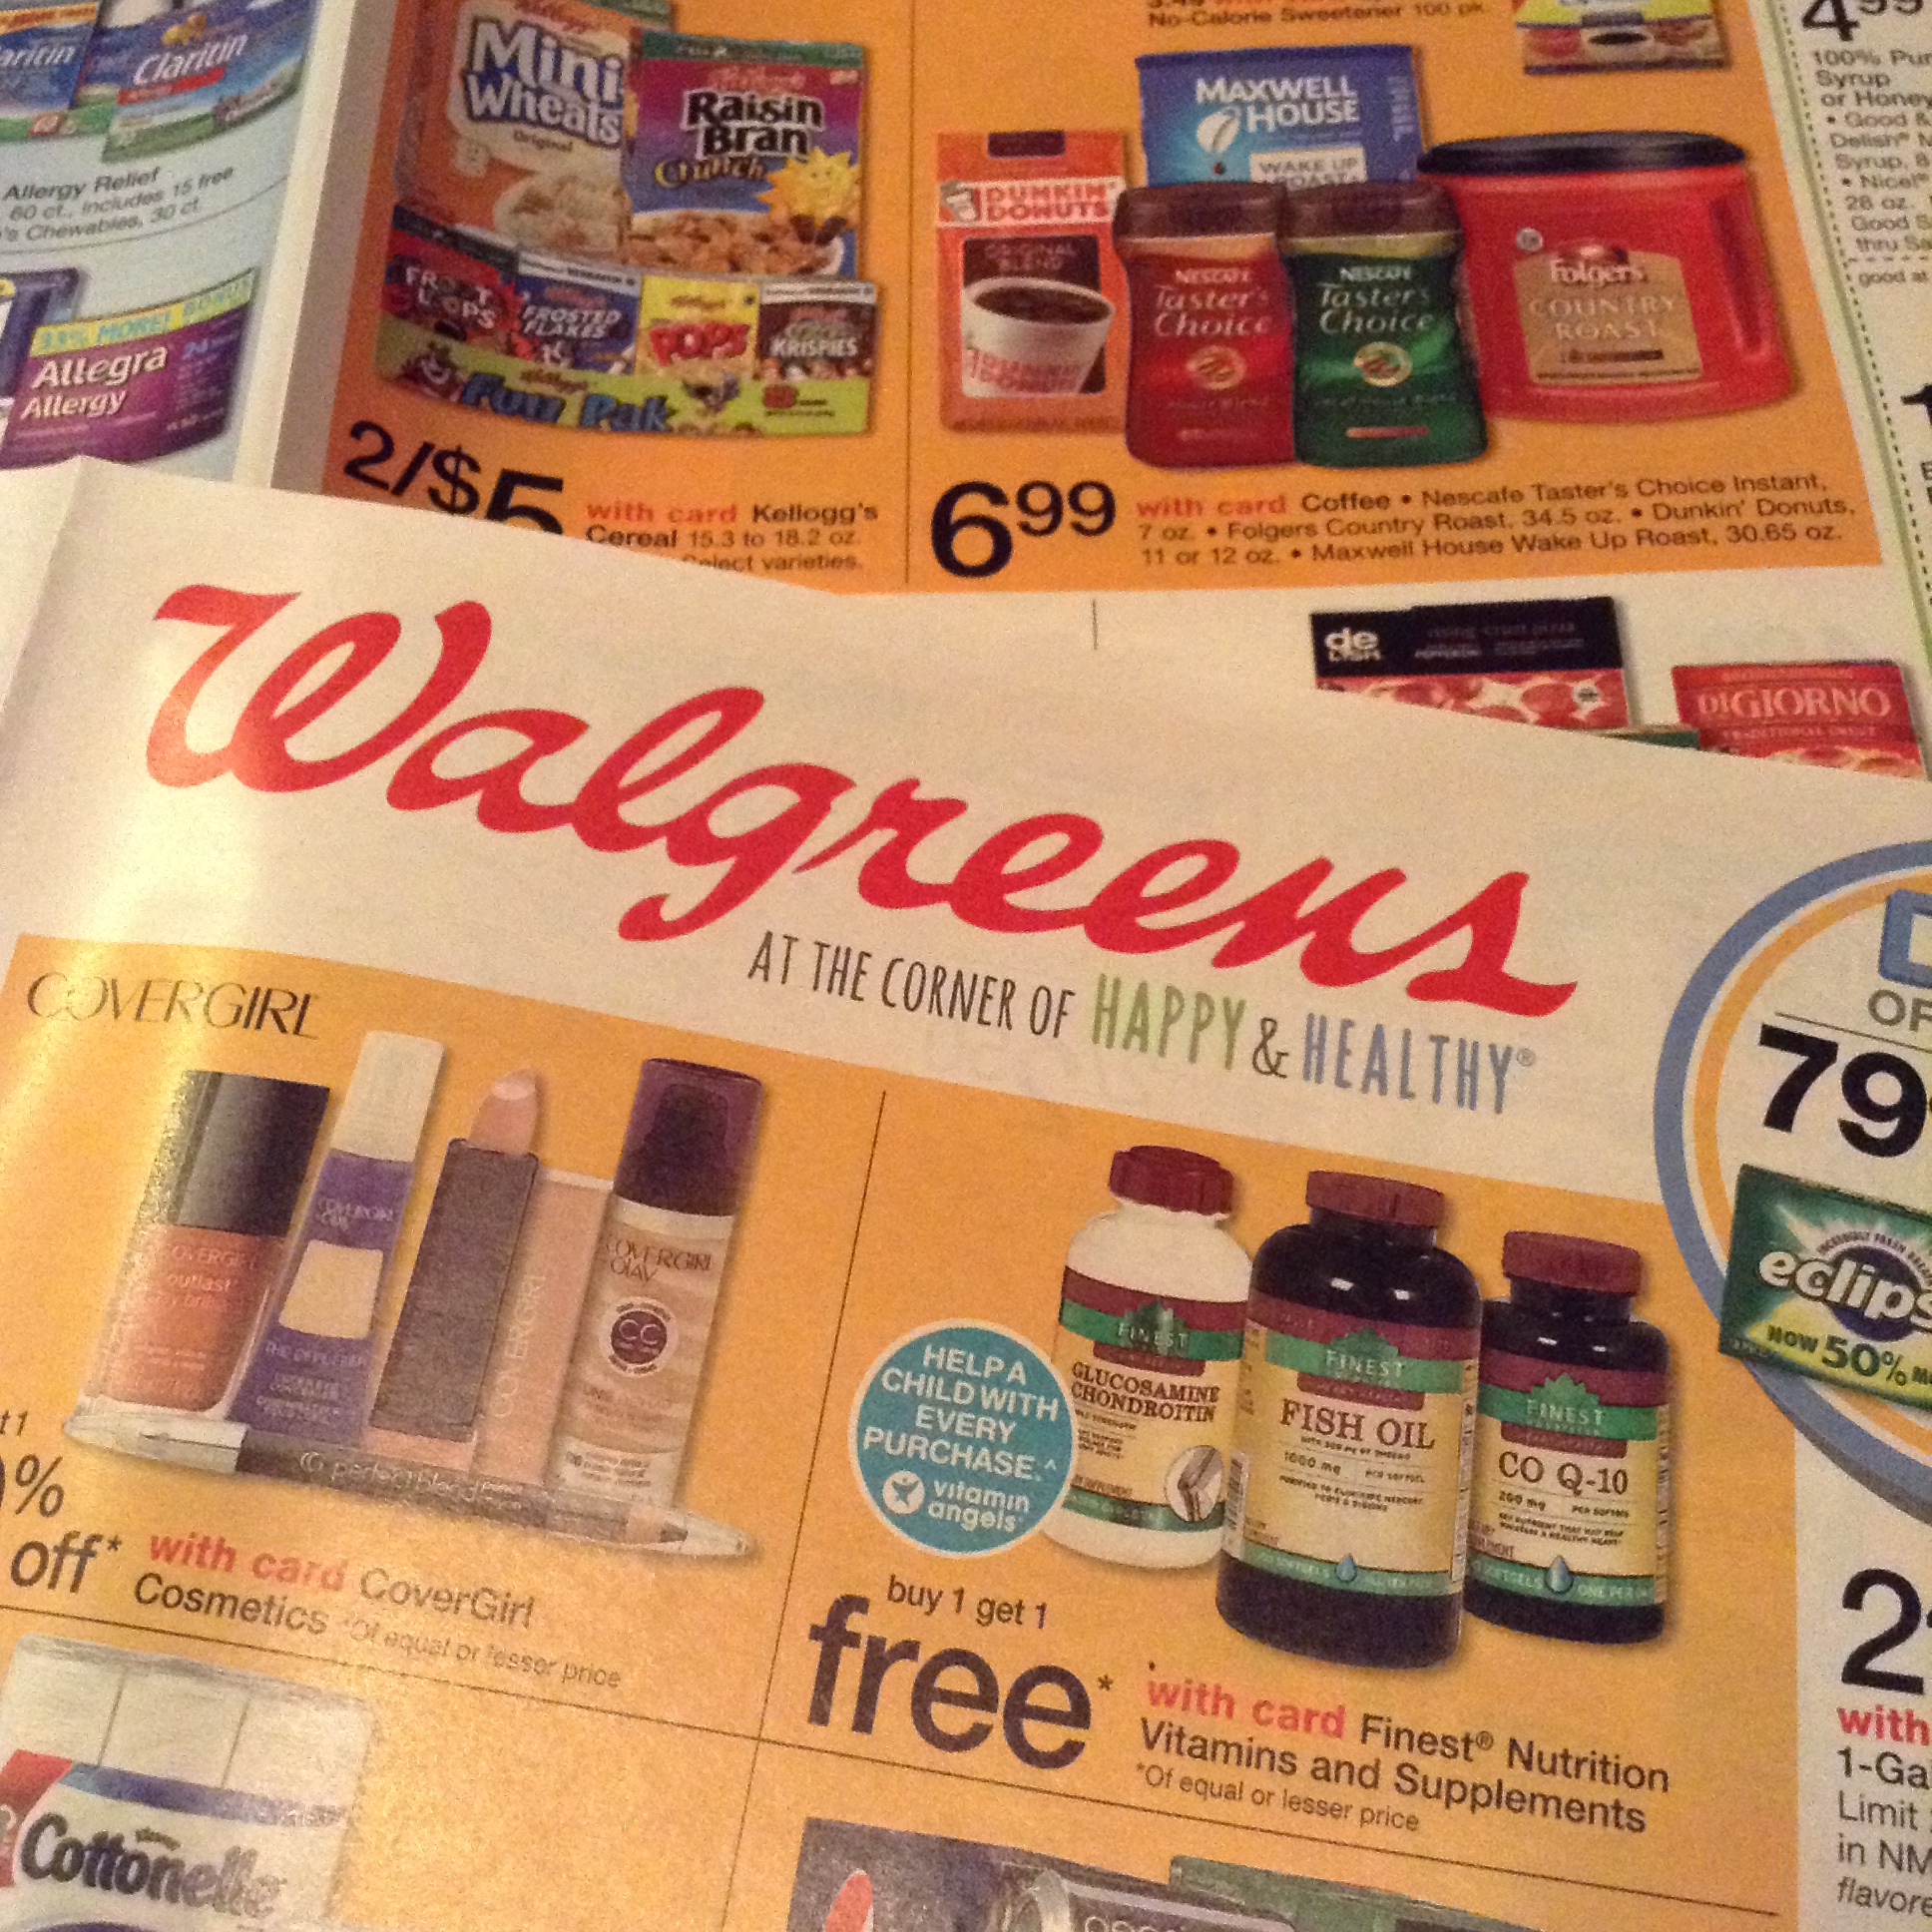 Walgreens Deals of the Week: 4/19/15 – 4/25/15